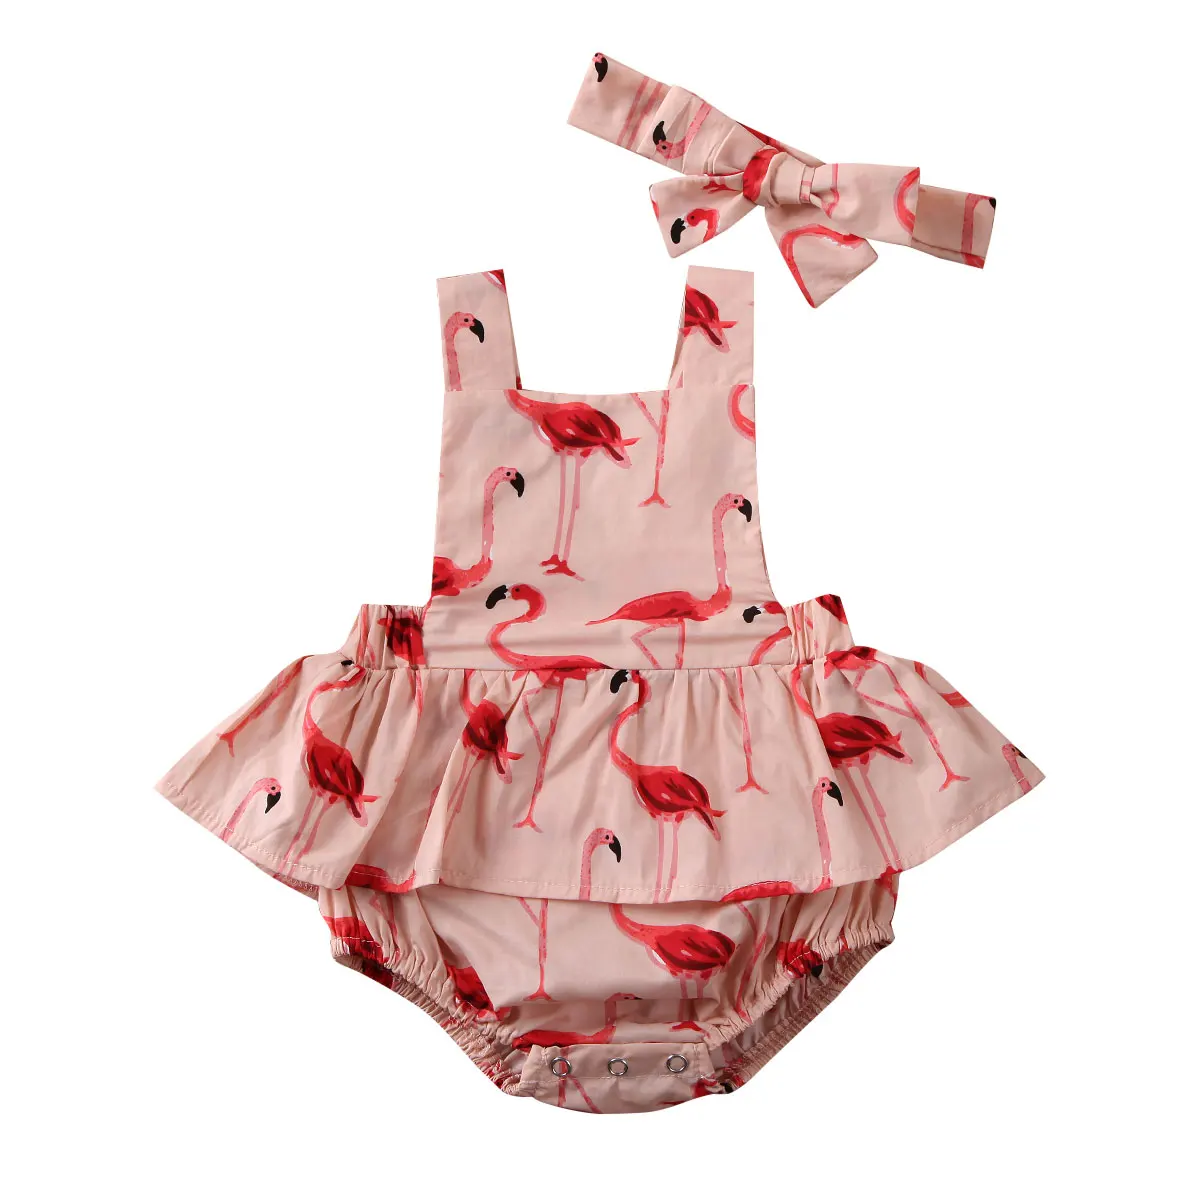 

2020 Summer Baby Bodysuit Newborn Baby Girl Clothes Flamingo Print Body Suit Playuist Tutu Dress Bodysuits Headband Outfit 0-24M